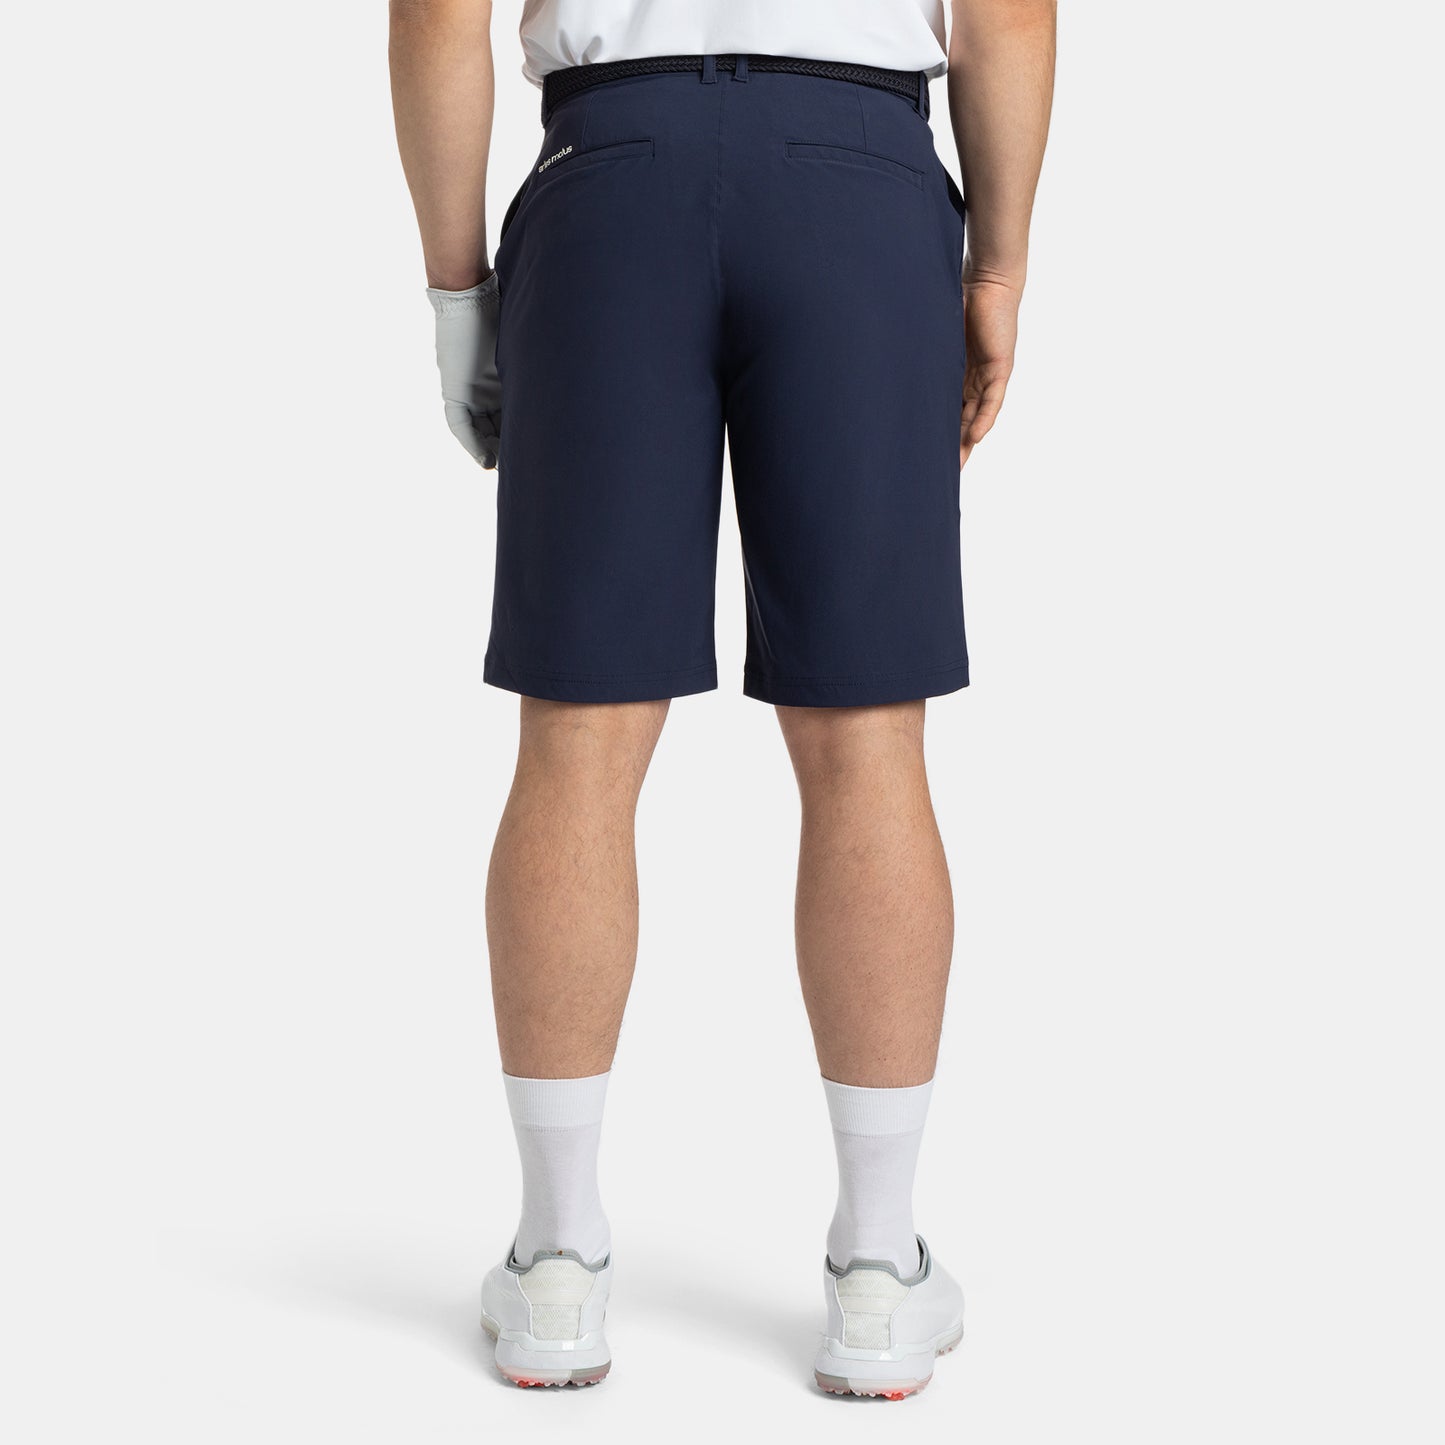 Men's Shorts "Phil"